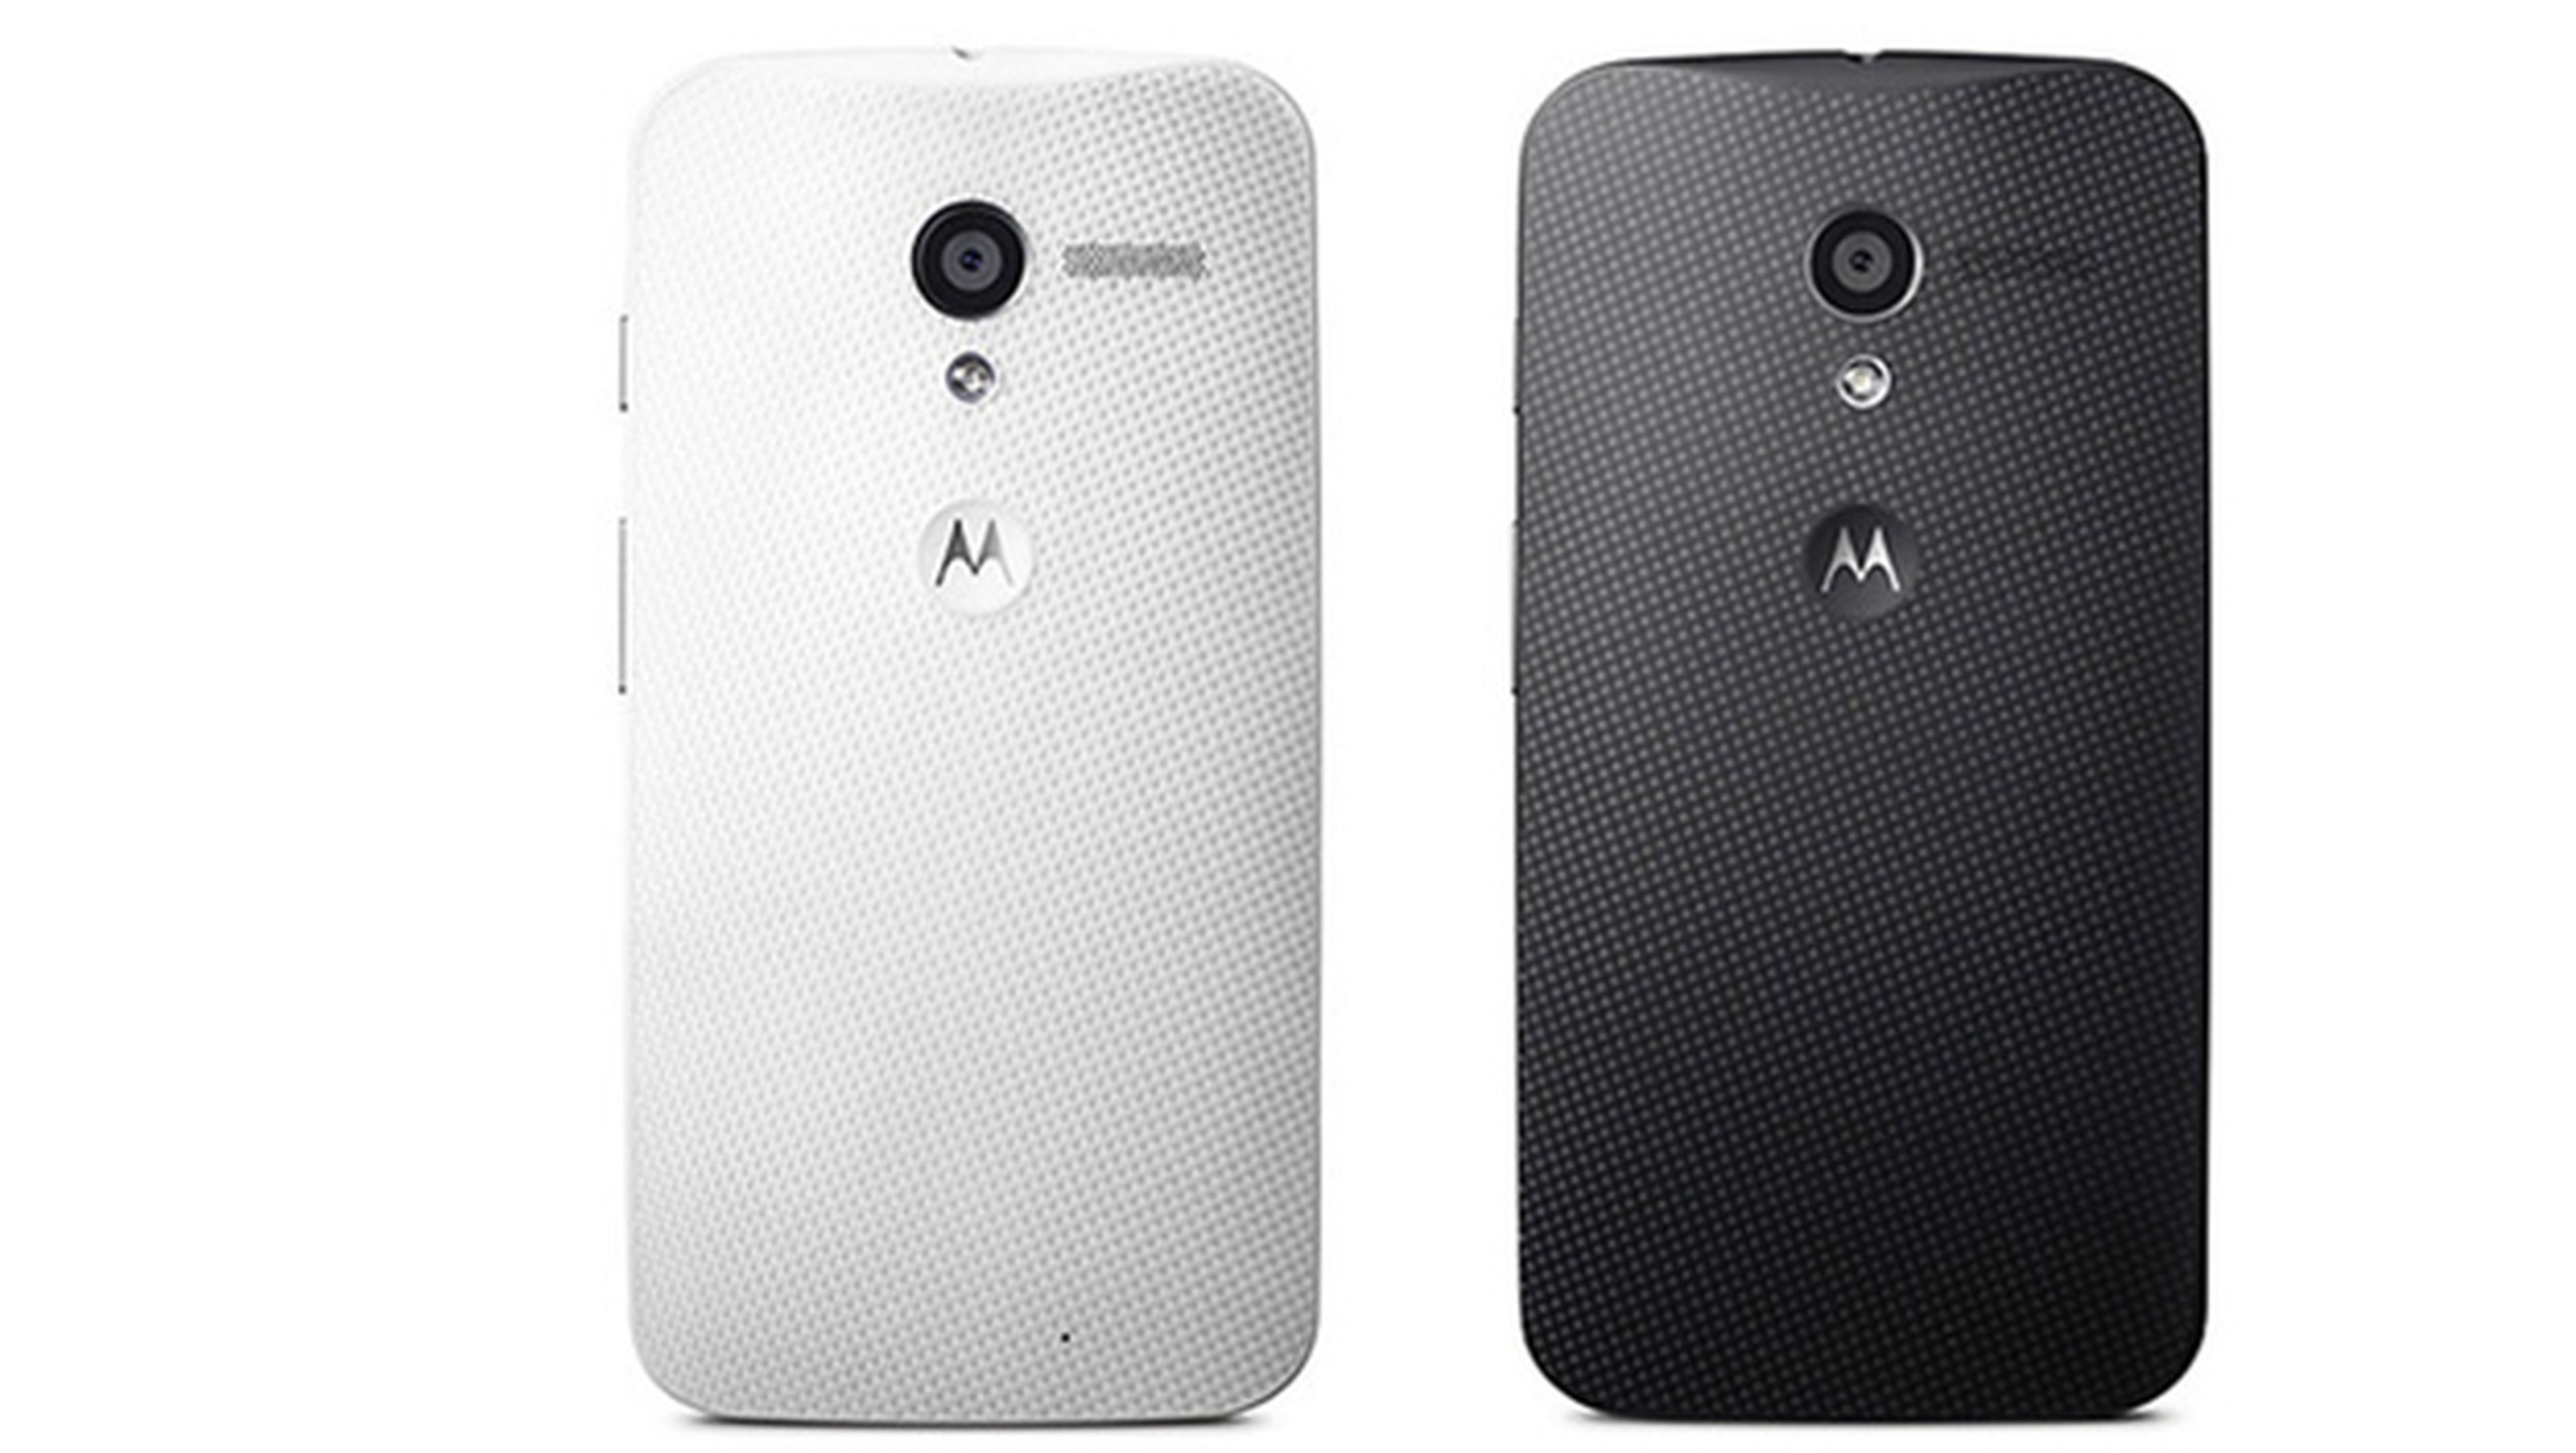 Motorola Moto X, resérvalo ya en España